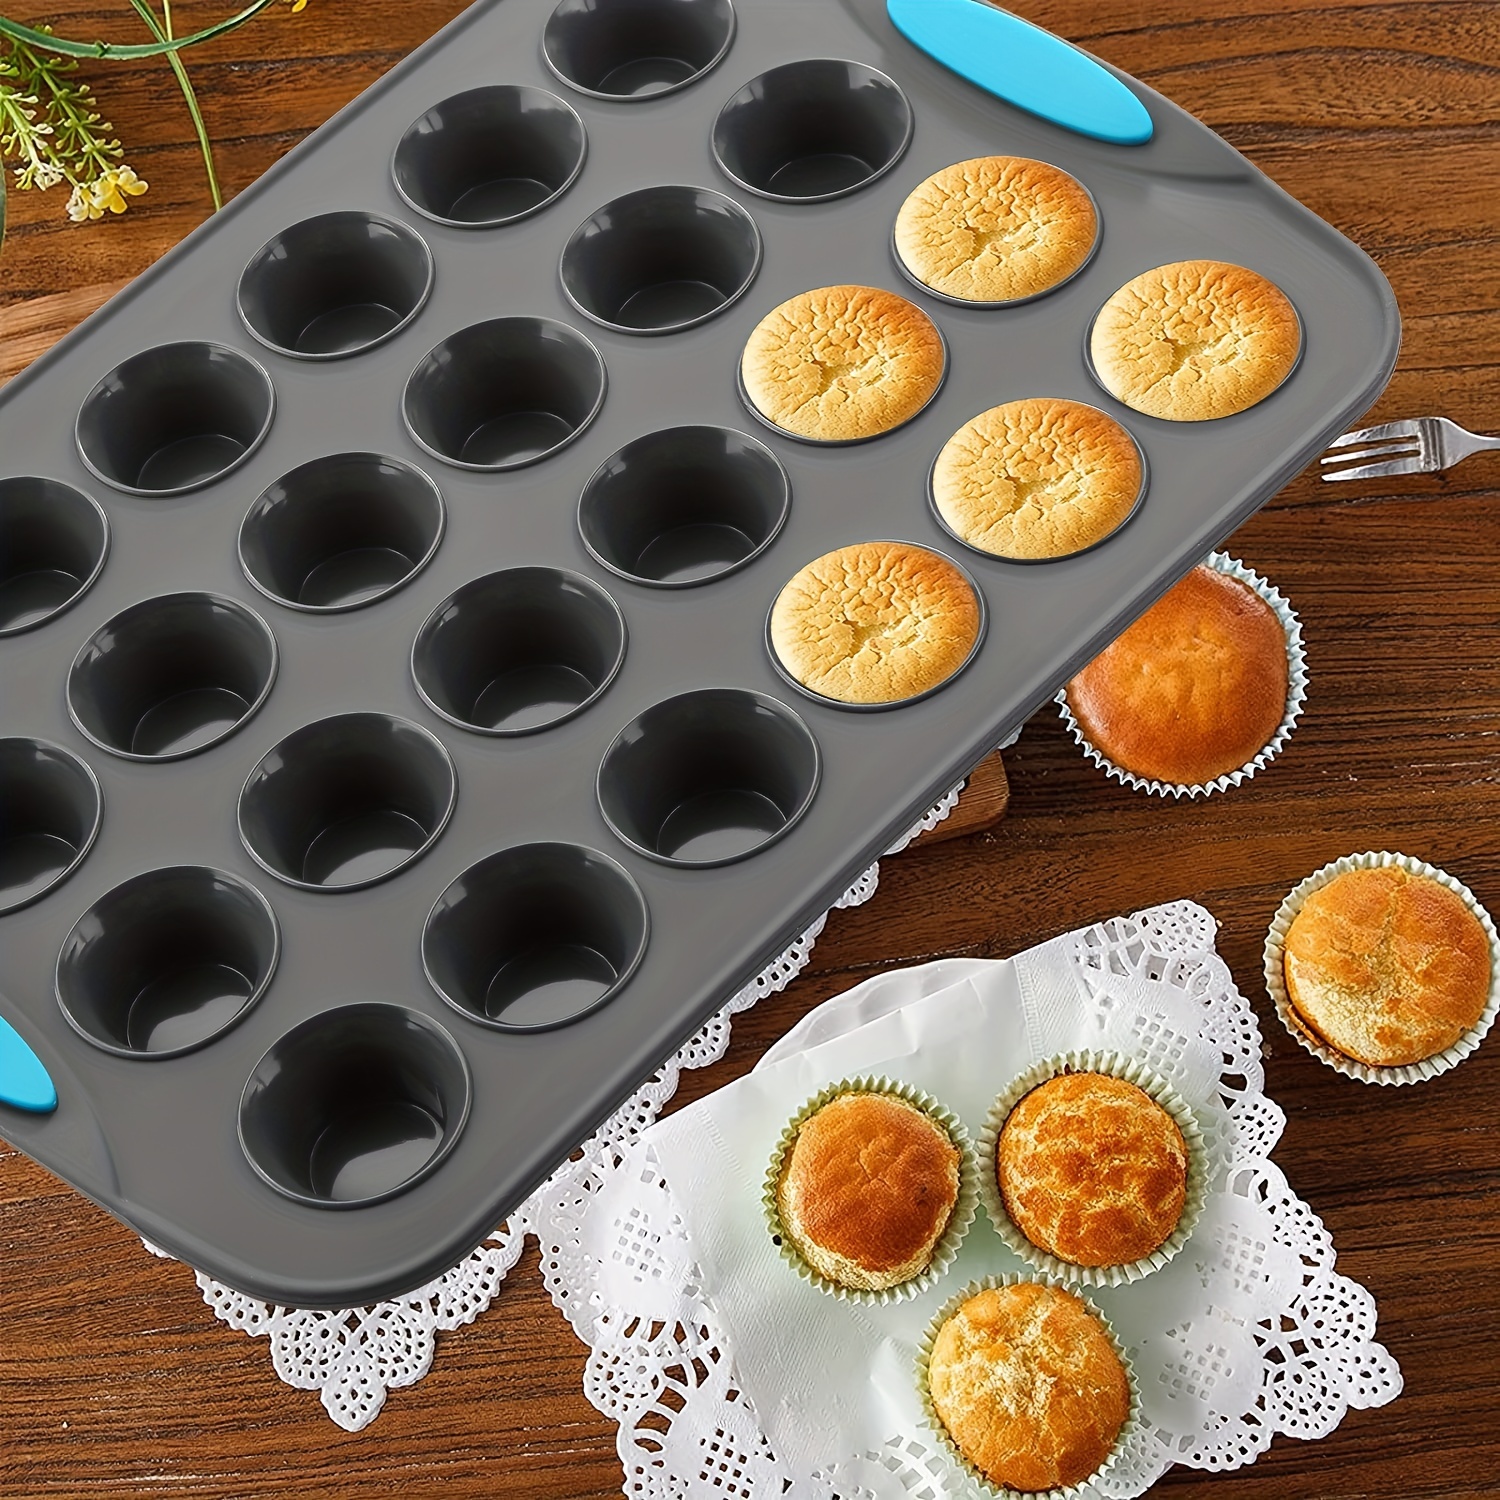 12 Cups Iron Non-stick Muffin Pan Metal Cupcake Baking Tray Mini Size